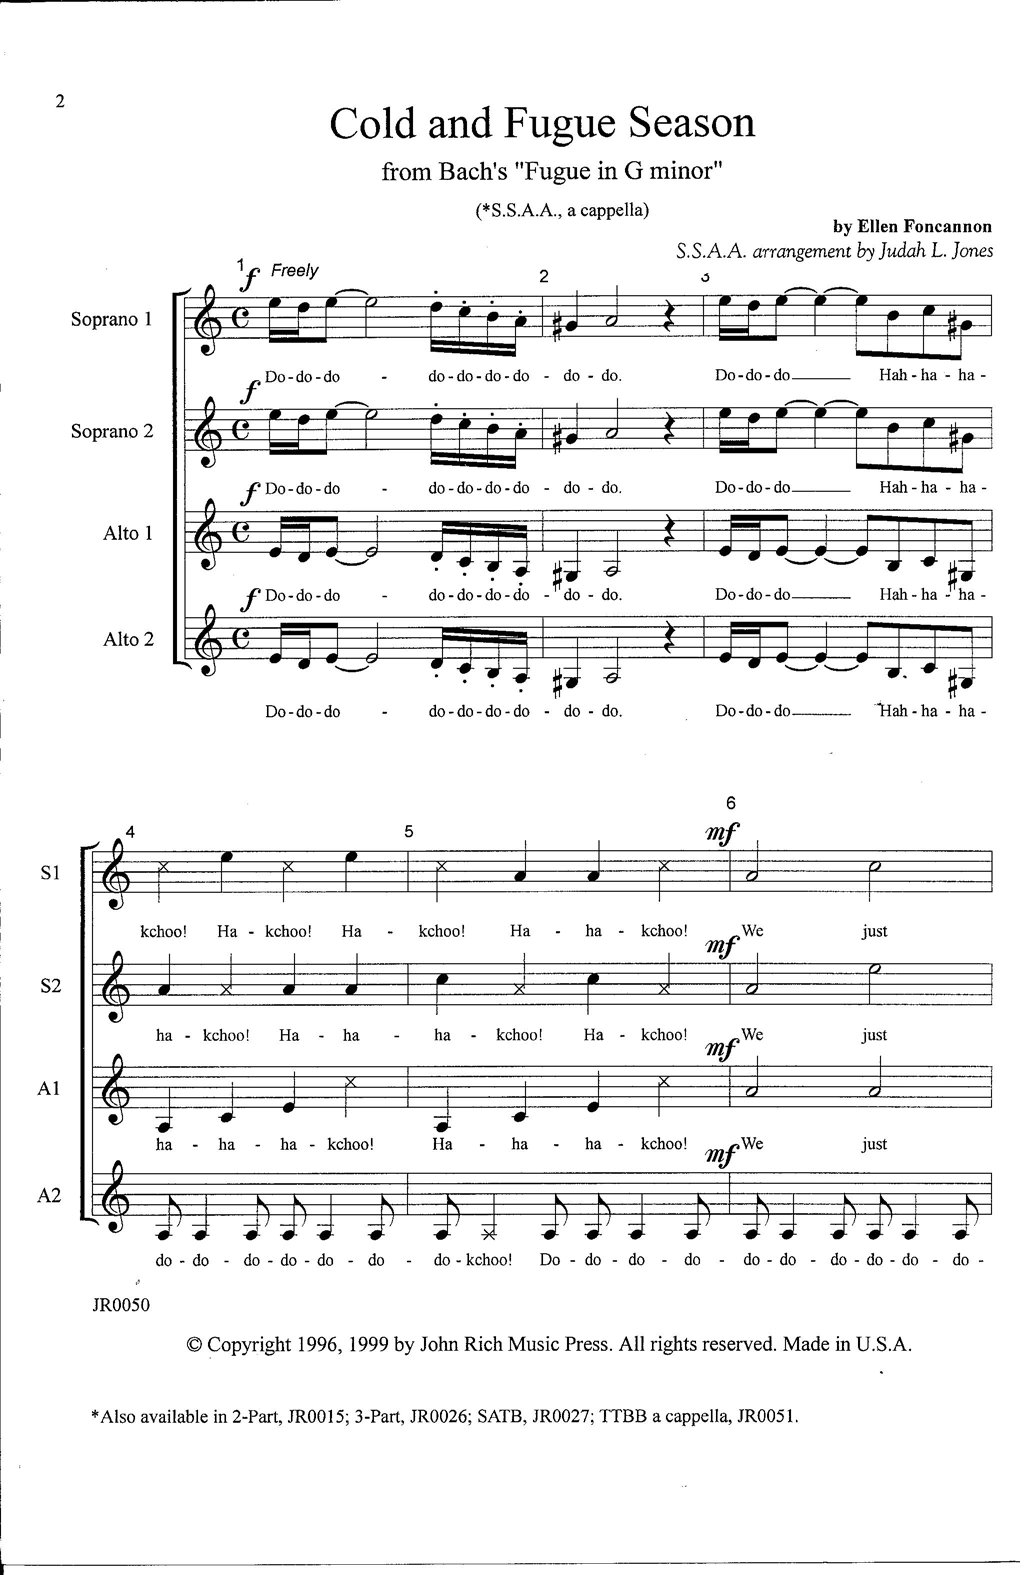 J.S. Bach Cold and Fugue Season (arr. Ellen Foncannon) Sheet Music Notes & Chords for TTBB Choir - Download or Print PDF